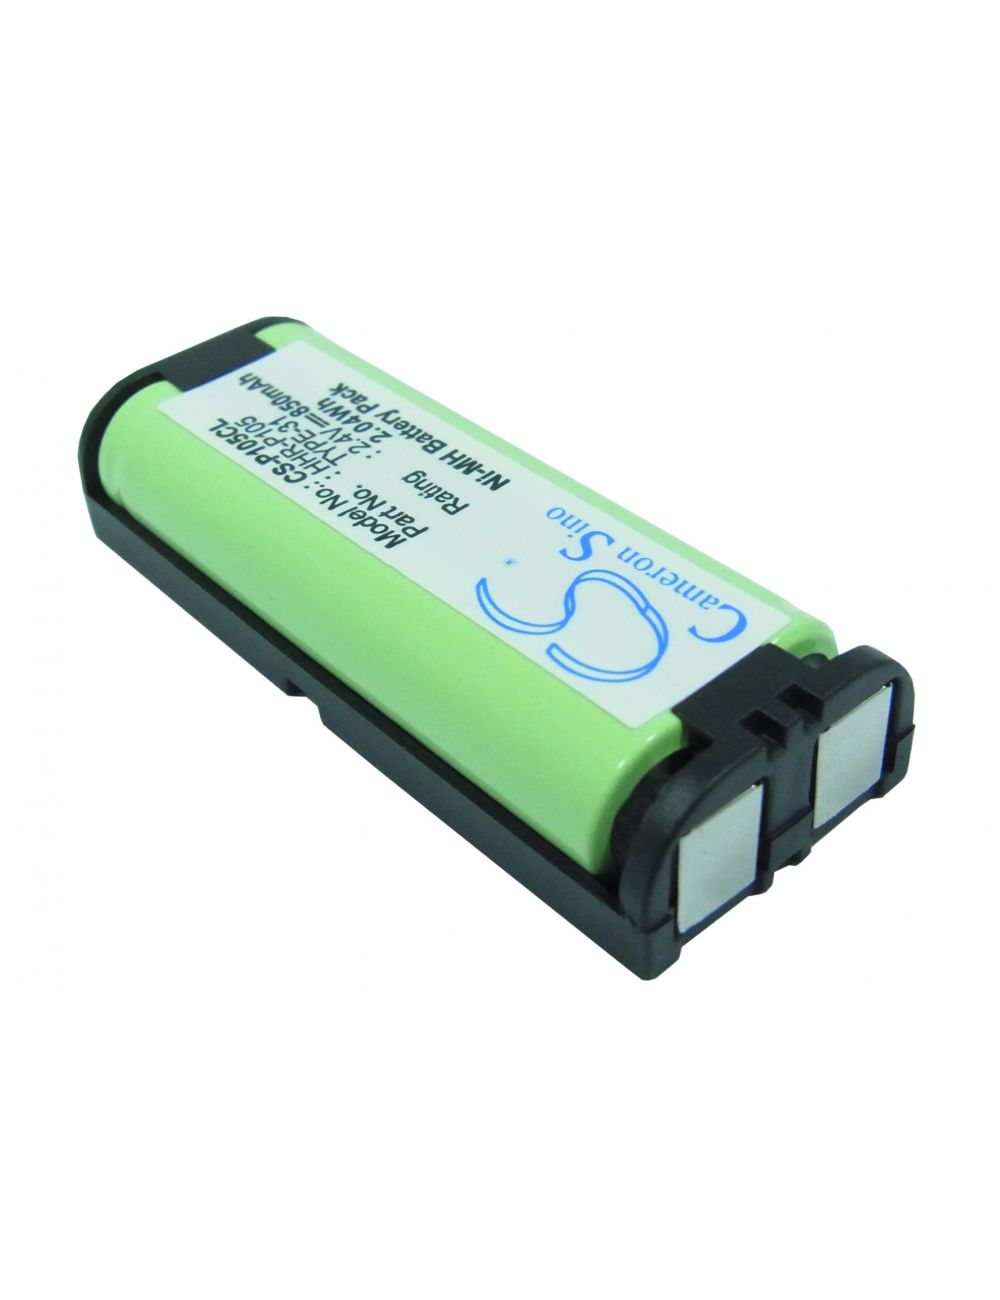 Batería Panasonic HHR-P105, TYPE 31 compatible 2,4V 850mAh Ni-Mh - CS-P105CL -  - 4894128021520 - 1